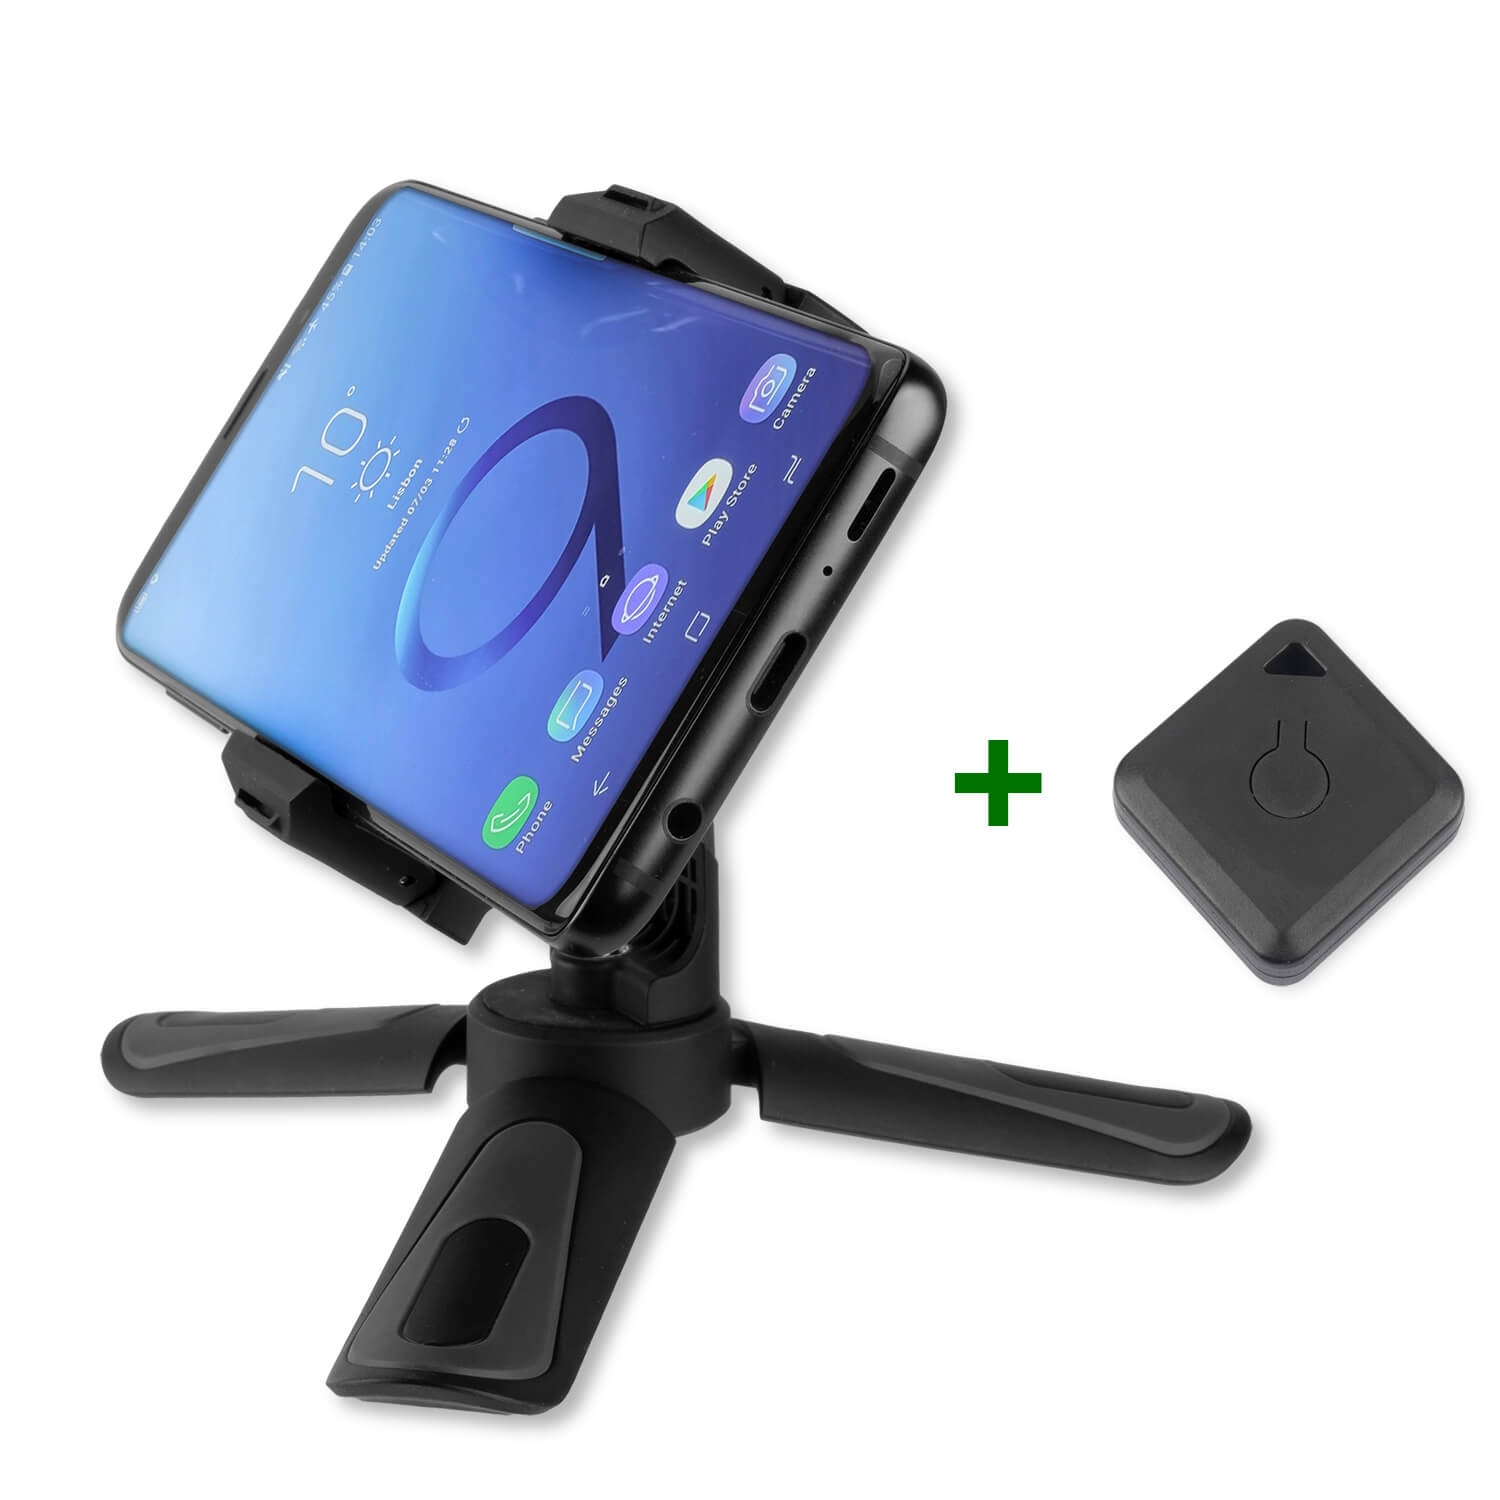 4smarts Pocket Tripod with Bluetooth Controller - джобен трипод с bluetooth за смартфони (черен)